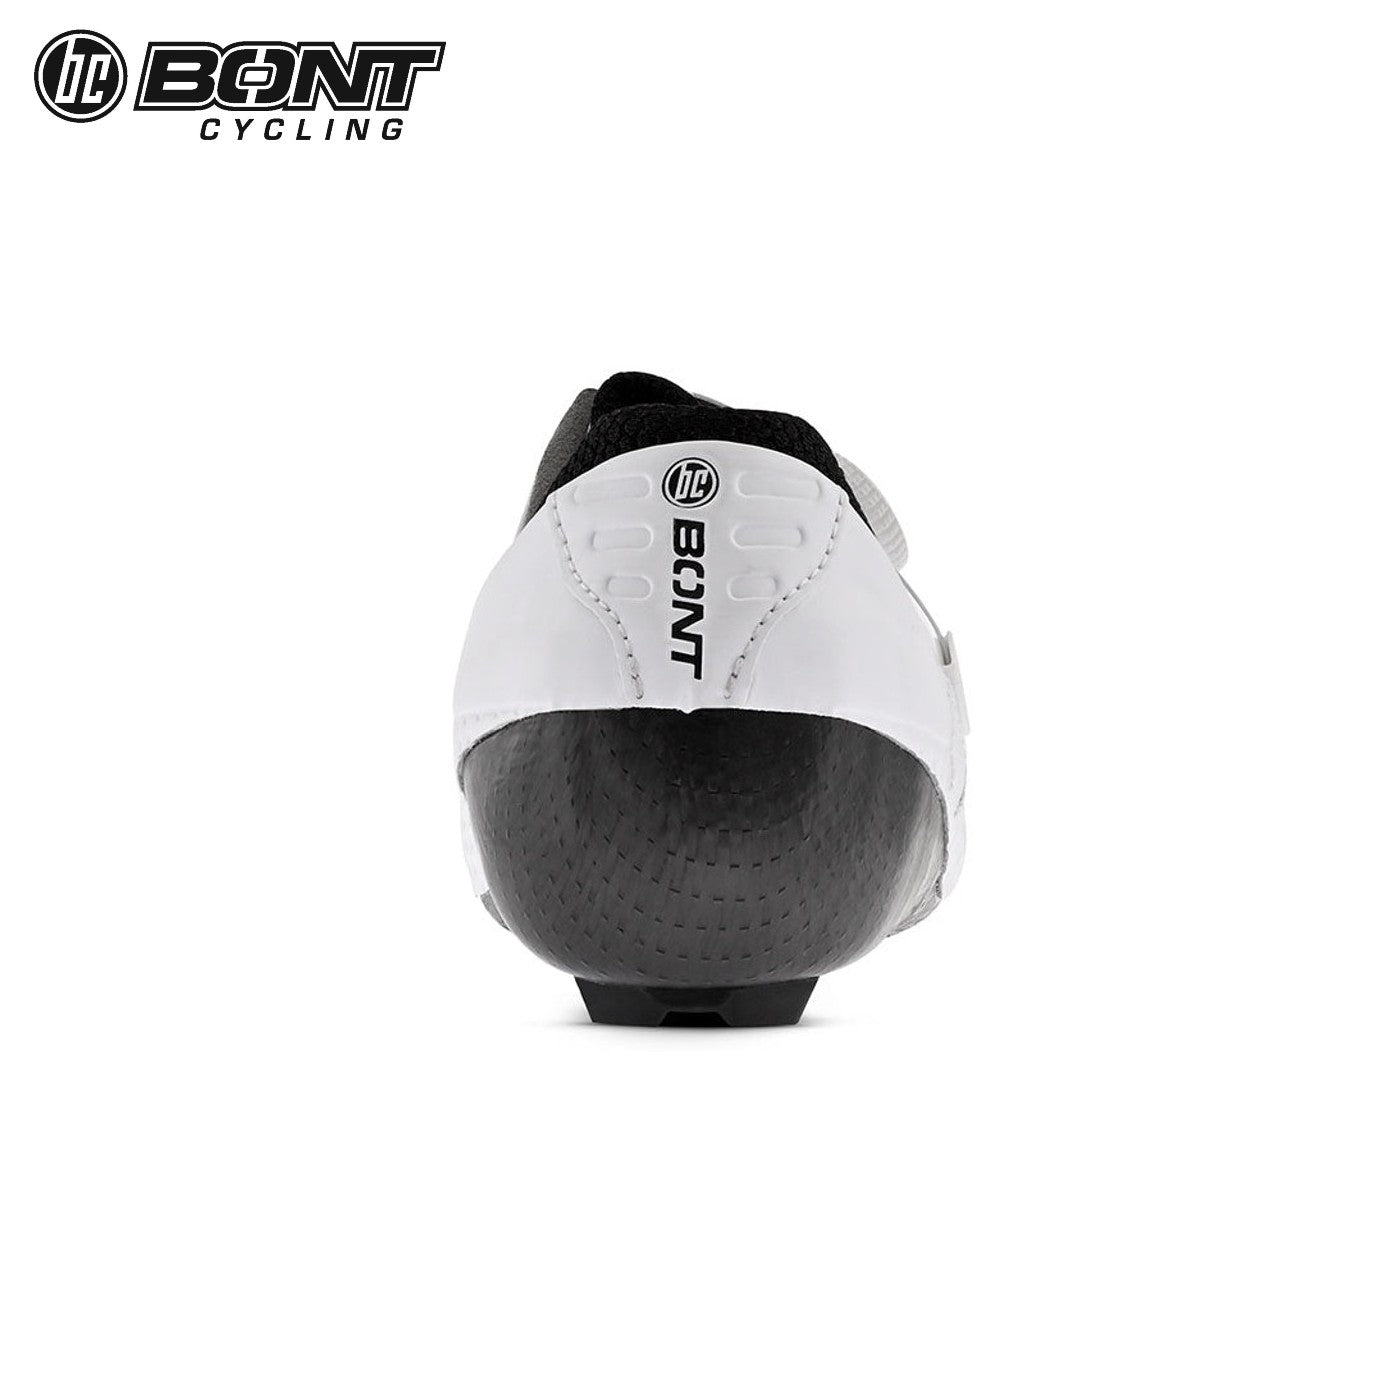 Bont Vaypor S LI2 Carbon Composite / BOA Cycling Shoes - White LI2